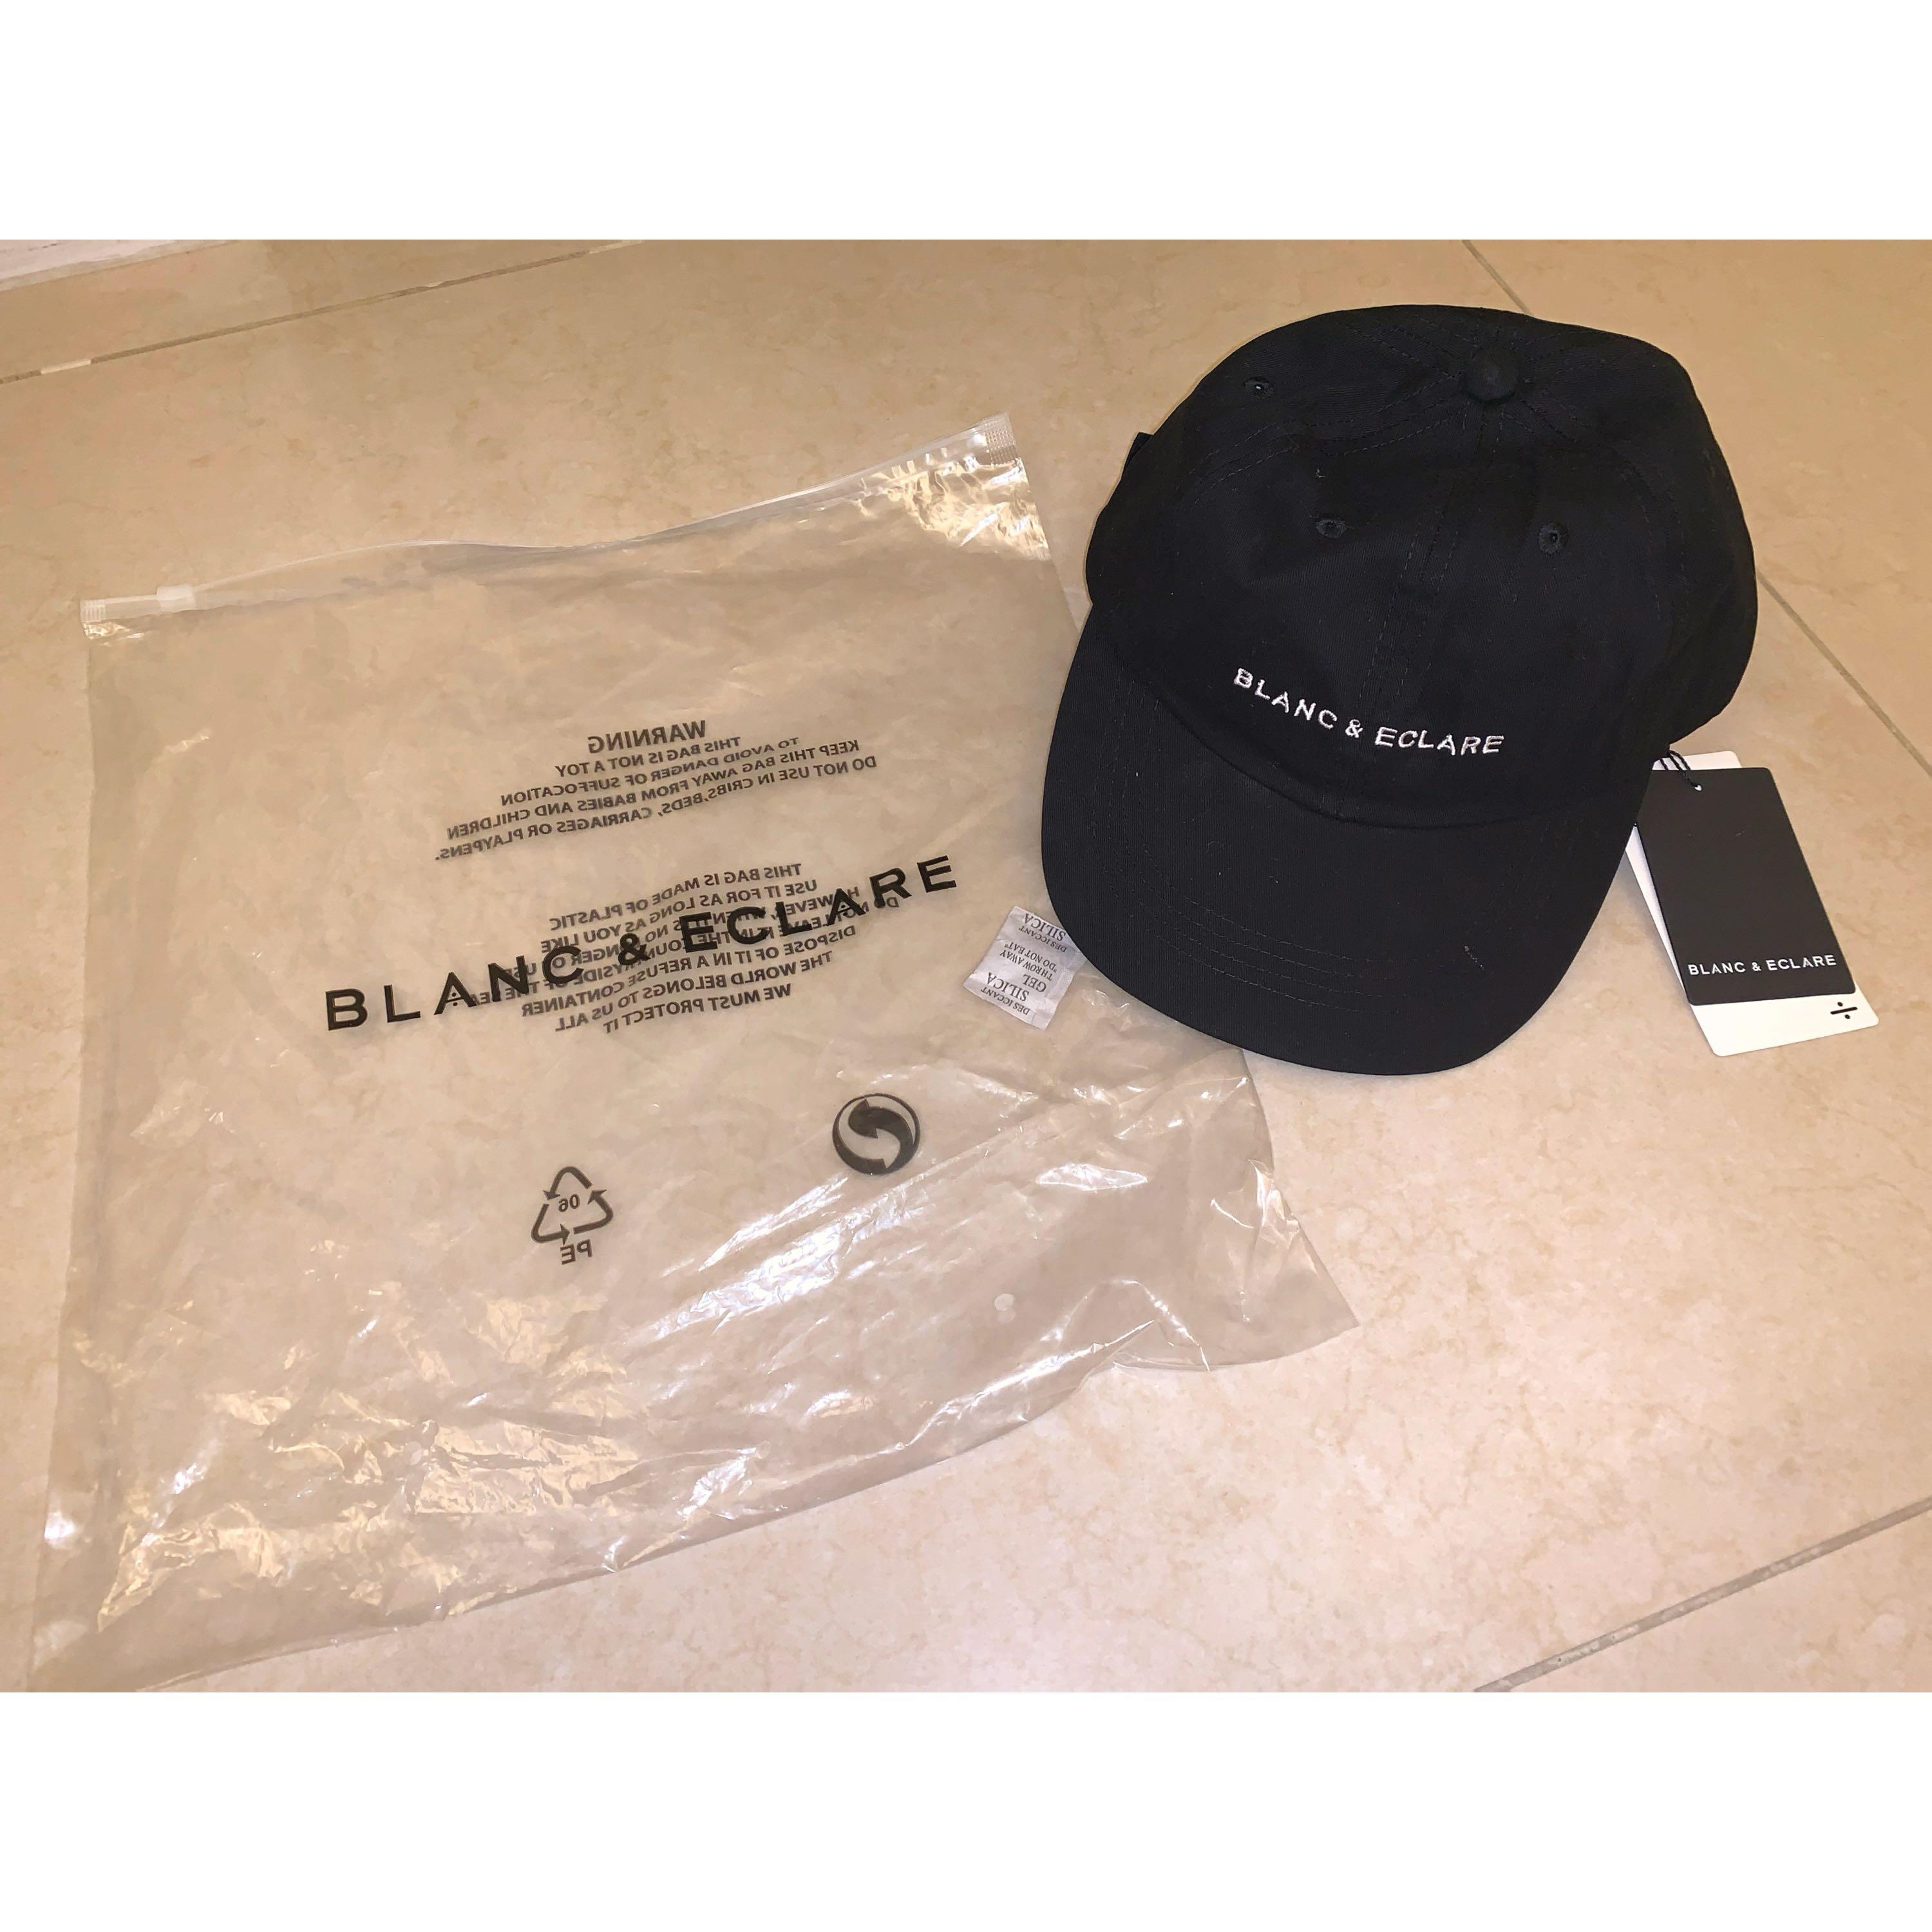 Jessica Jung BLANC & ECLARE cap帽購至官網, 興趣及遊戲, 收藏品及